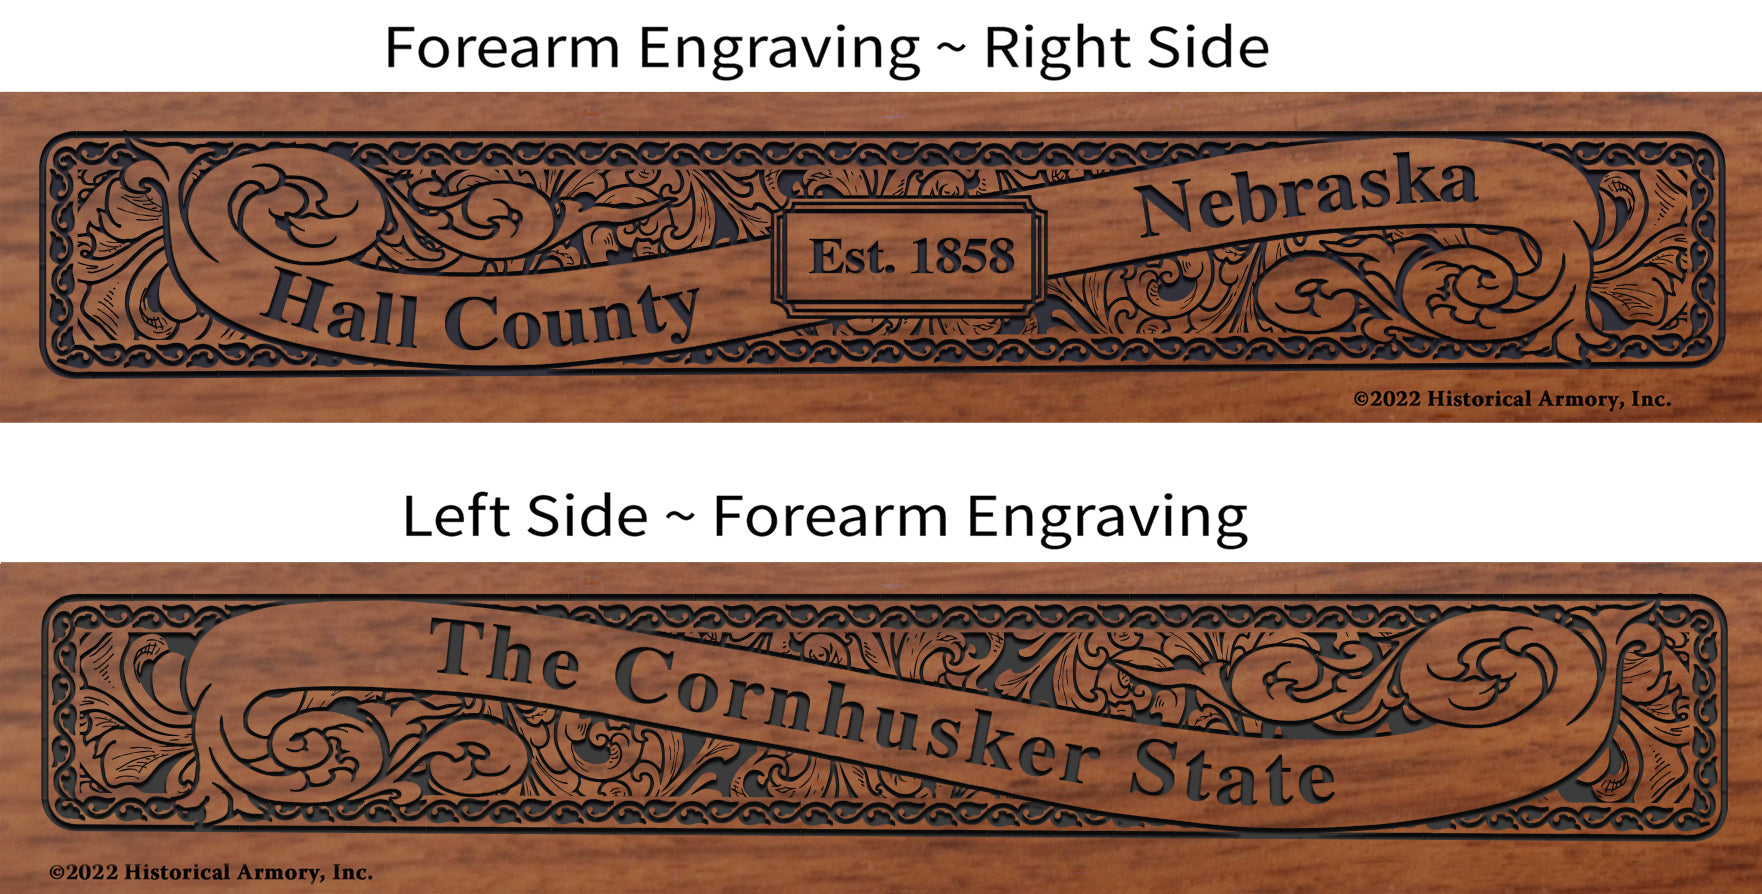 Hall County Nebraska Engraved Rifle Forearm